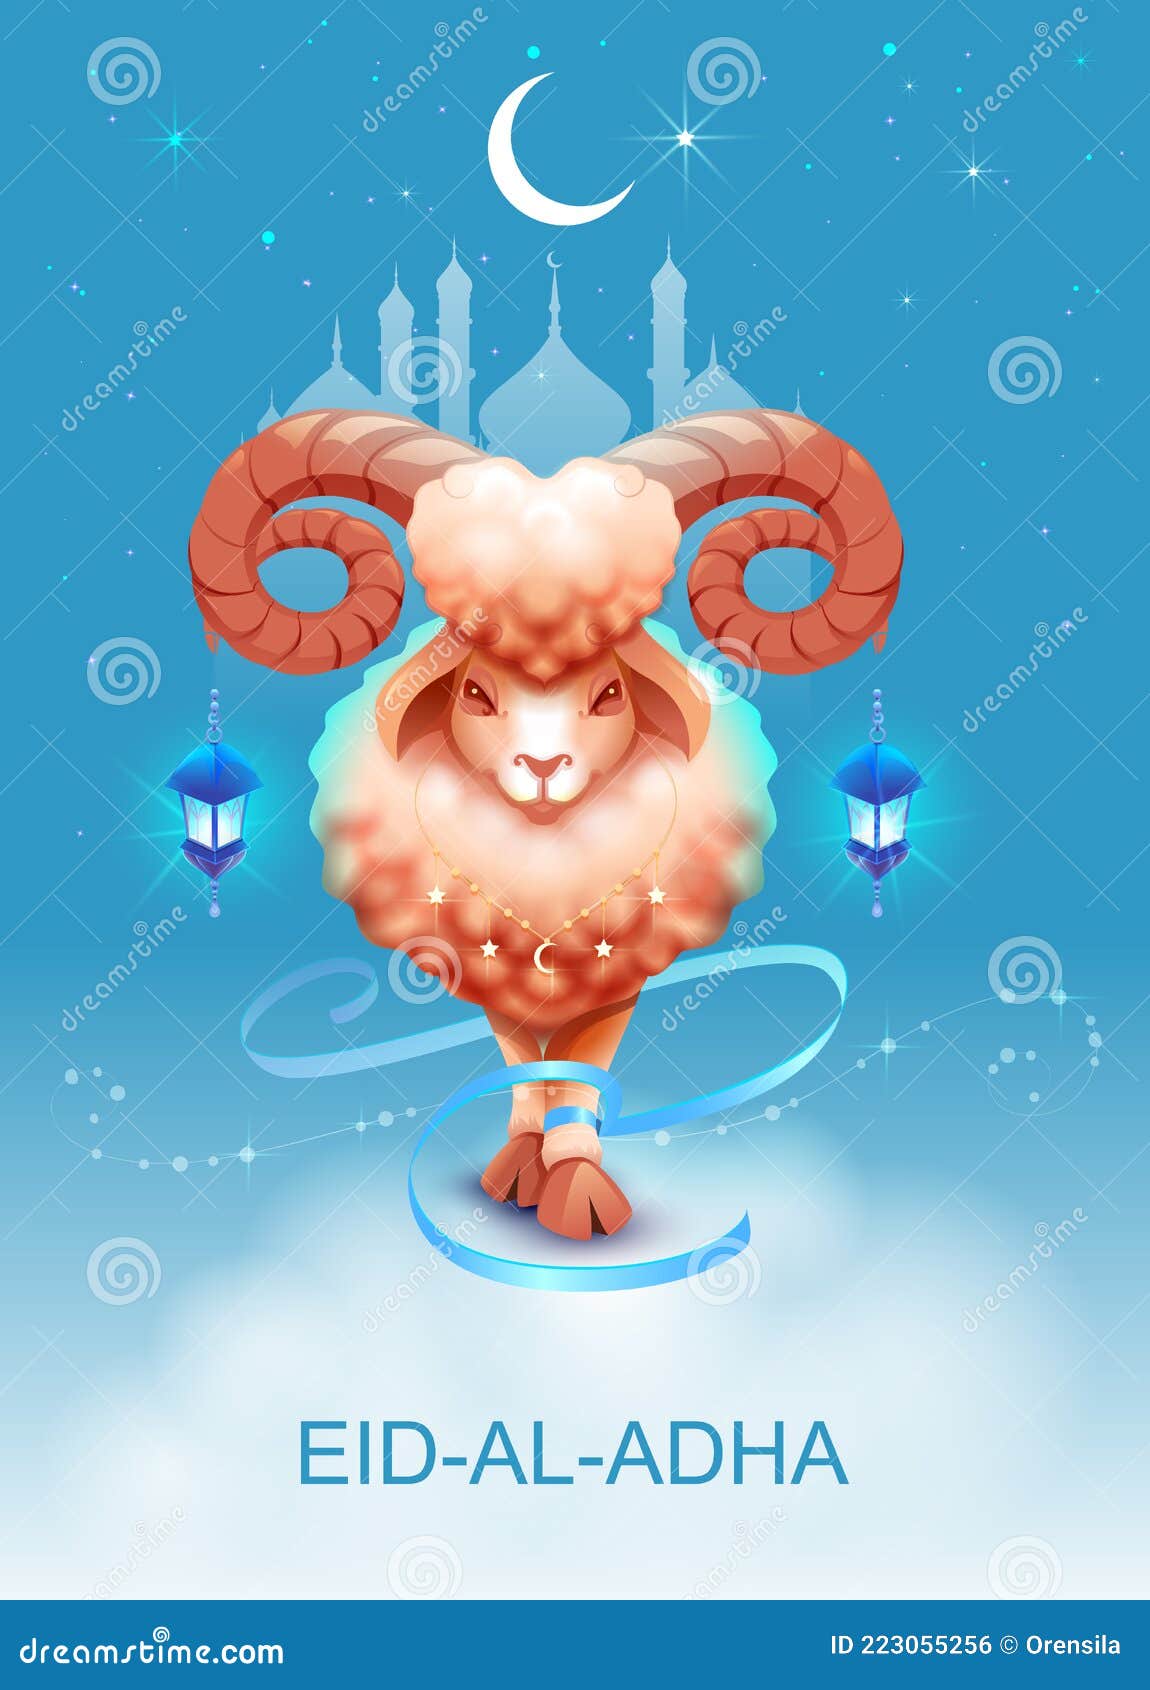 eid al adha feast of the sacrifice greeting card template. lamb sacrifice night sky crescent mosque sacred lamp